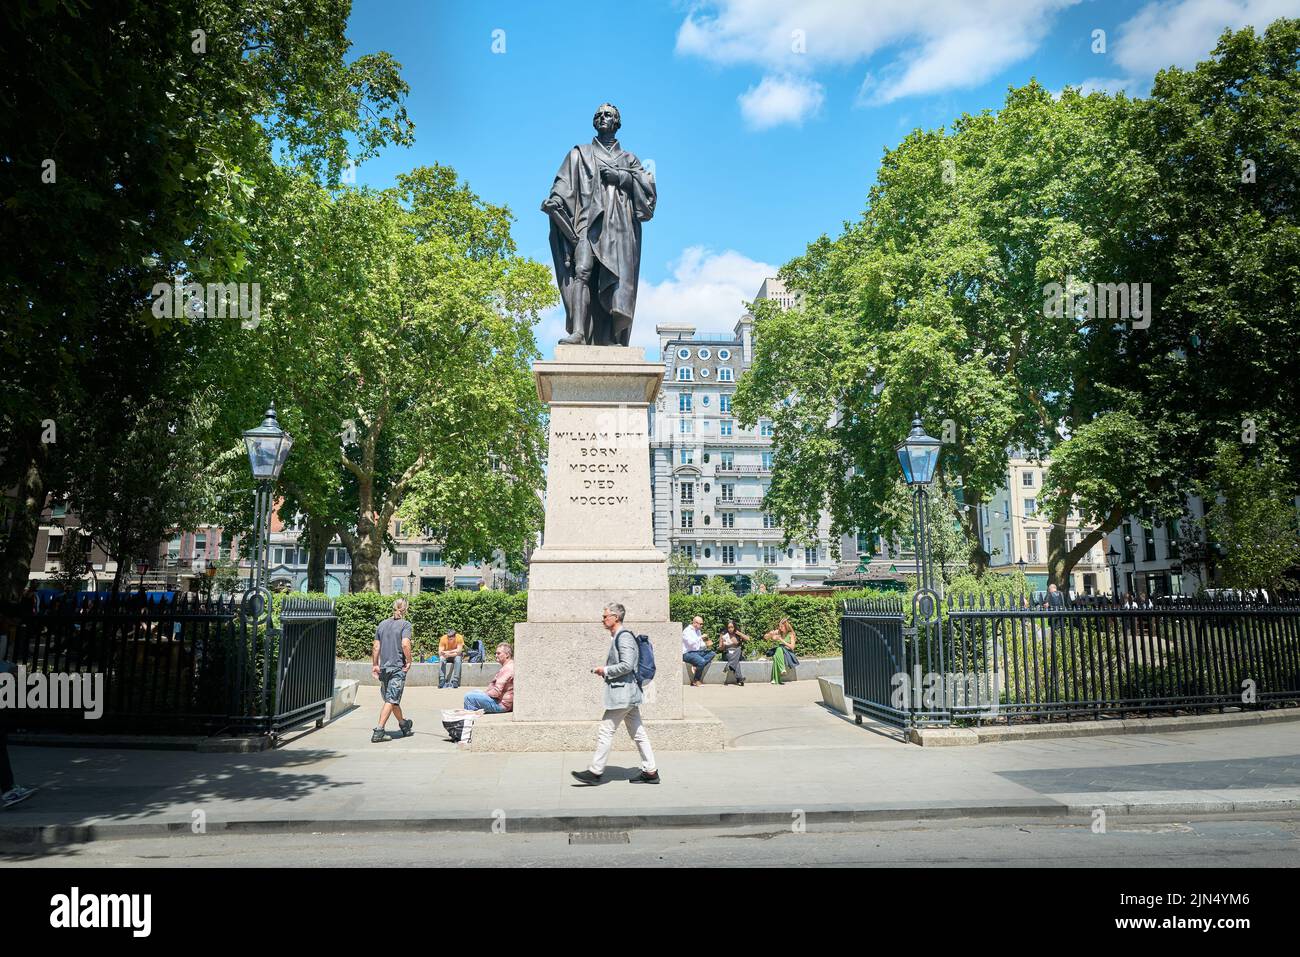 Memorial to Franklin D Roosevelt, president of the USA, Grosvenor Square gardens, Mayfair, London, England. Stock Photo